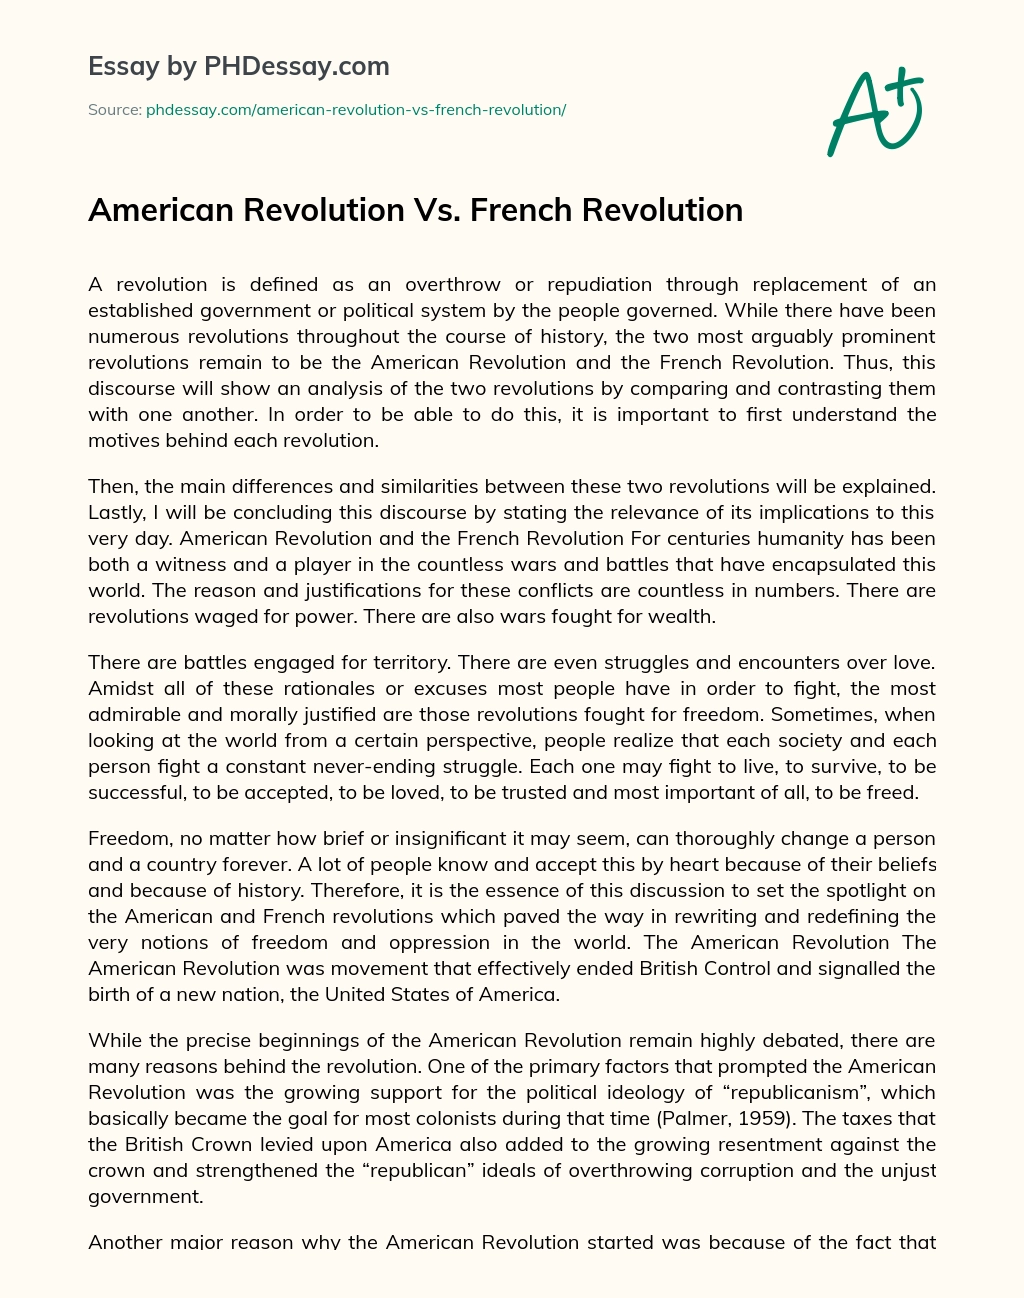 french revolution compared to american revolution